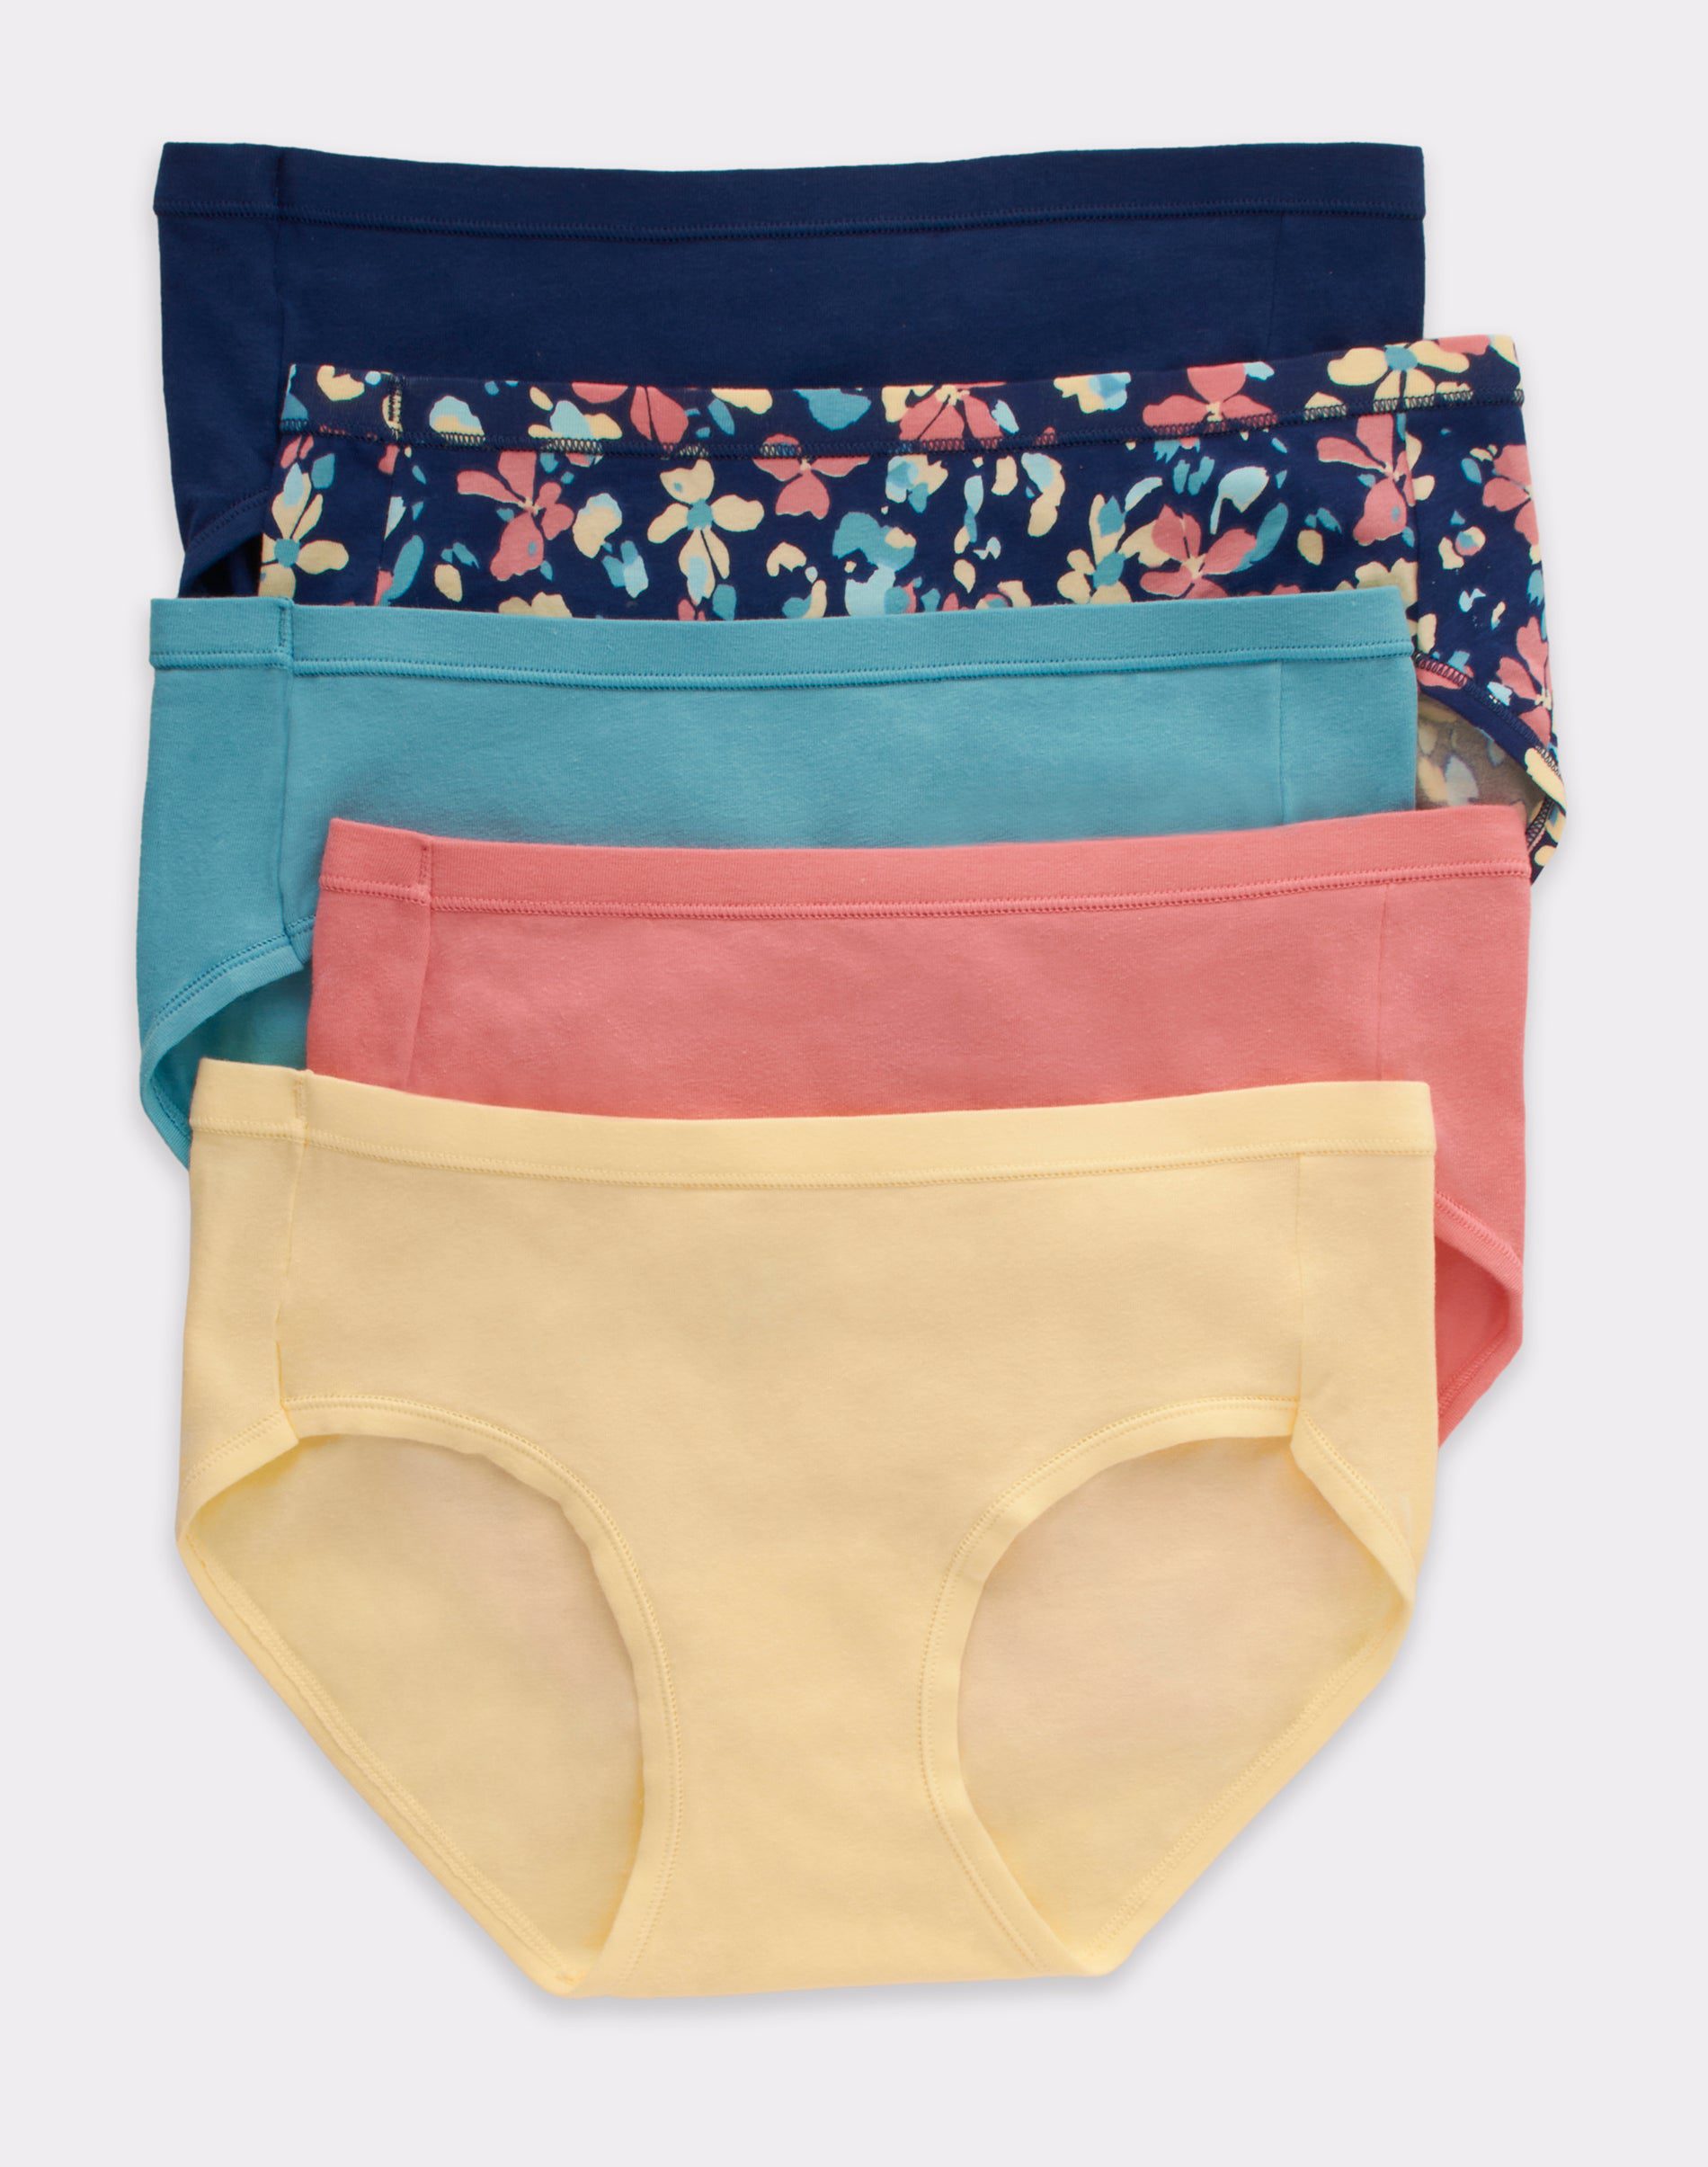 Hanes Ultimate Women's Breathable Cotton Bikini Underwear, 6-Pack  Pink/White/Concrete Heather/Black/Purple Heather/Purple Print 7